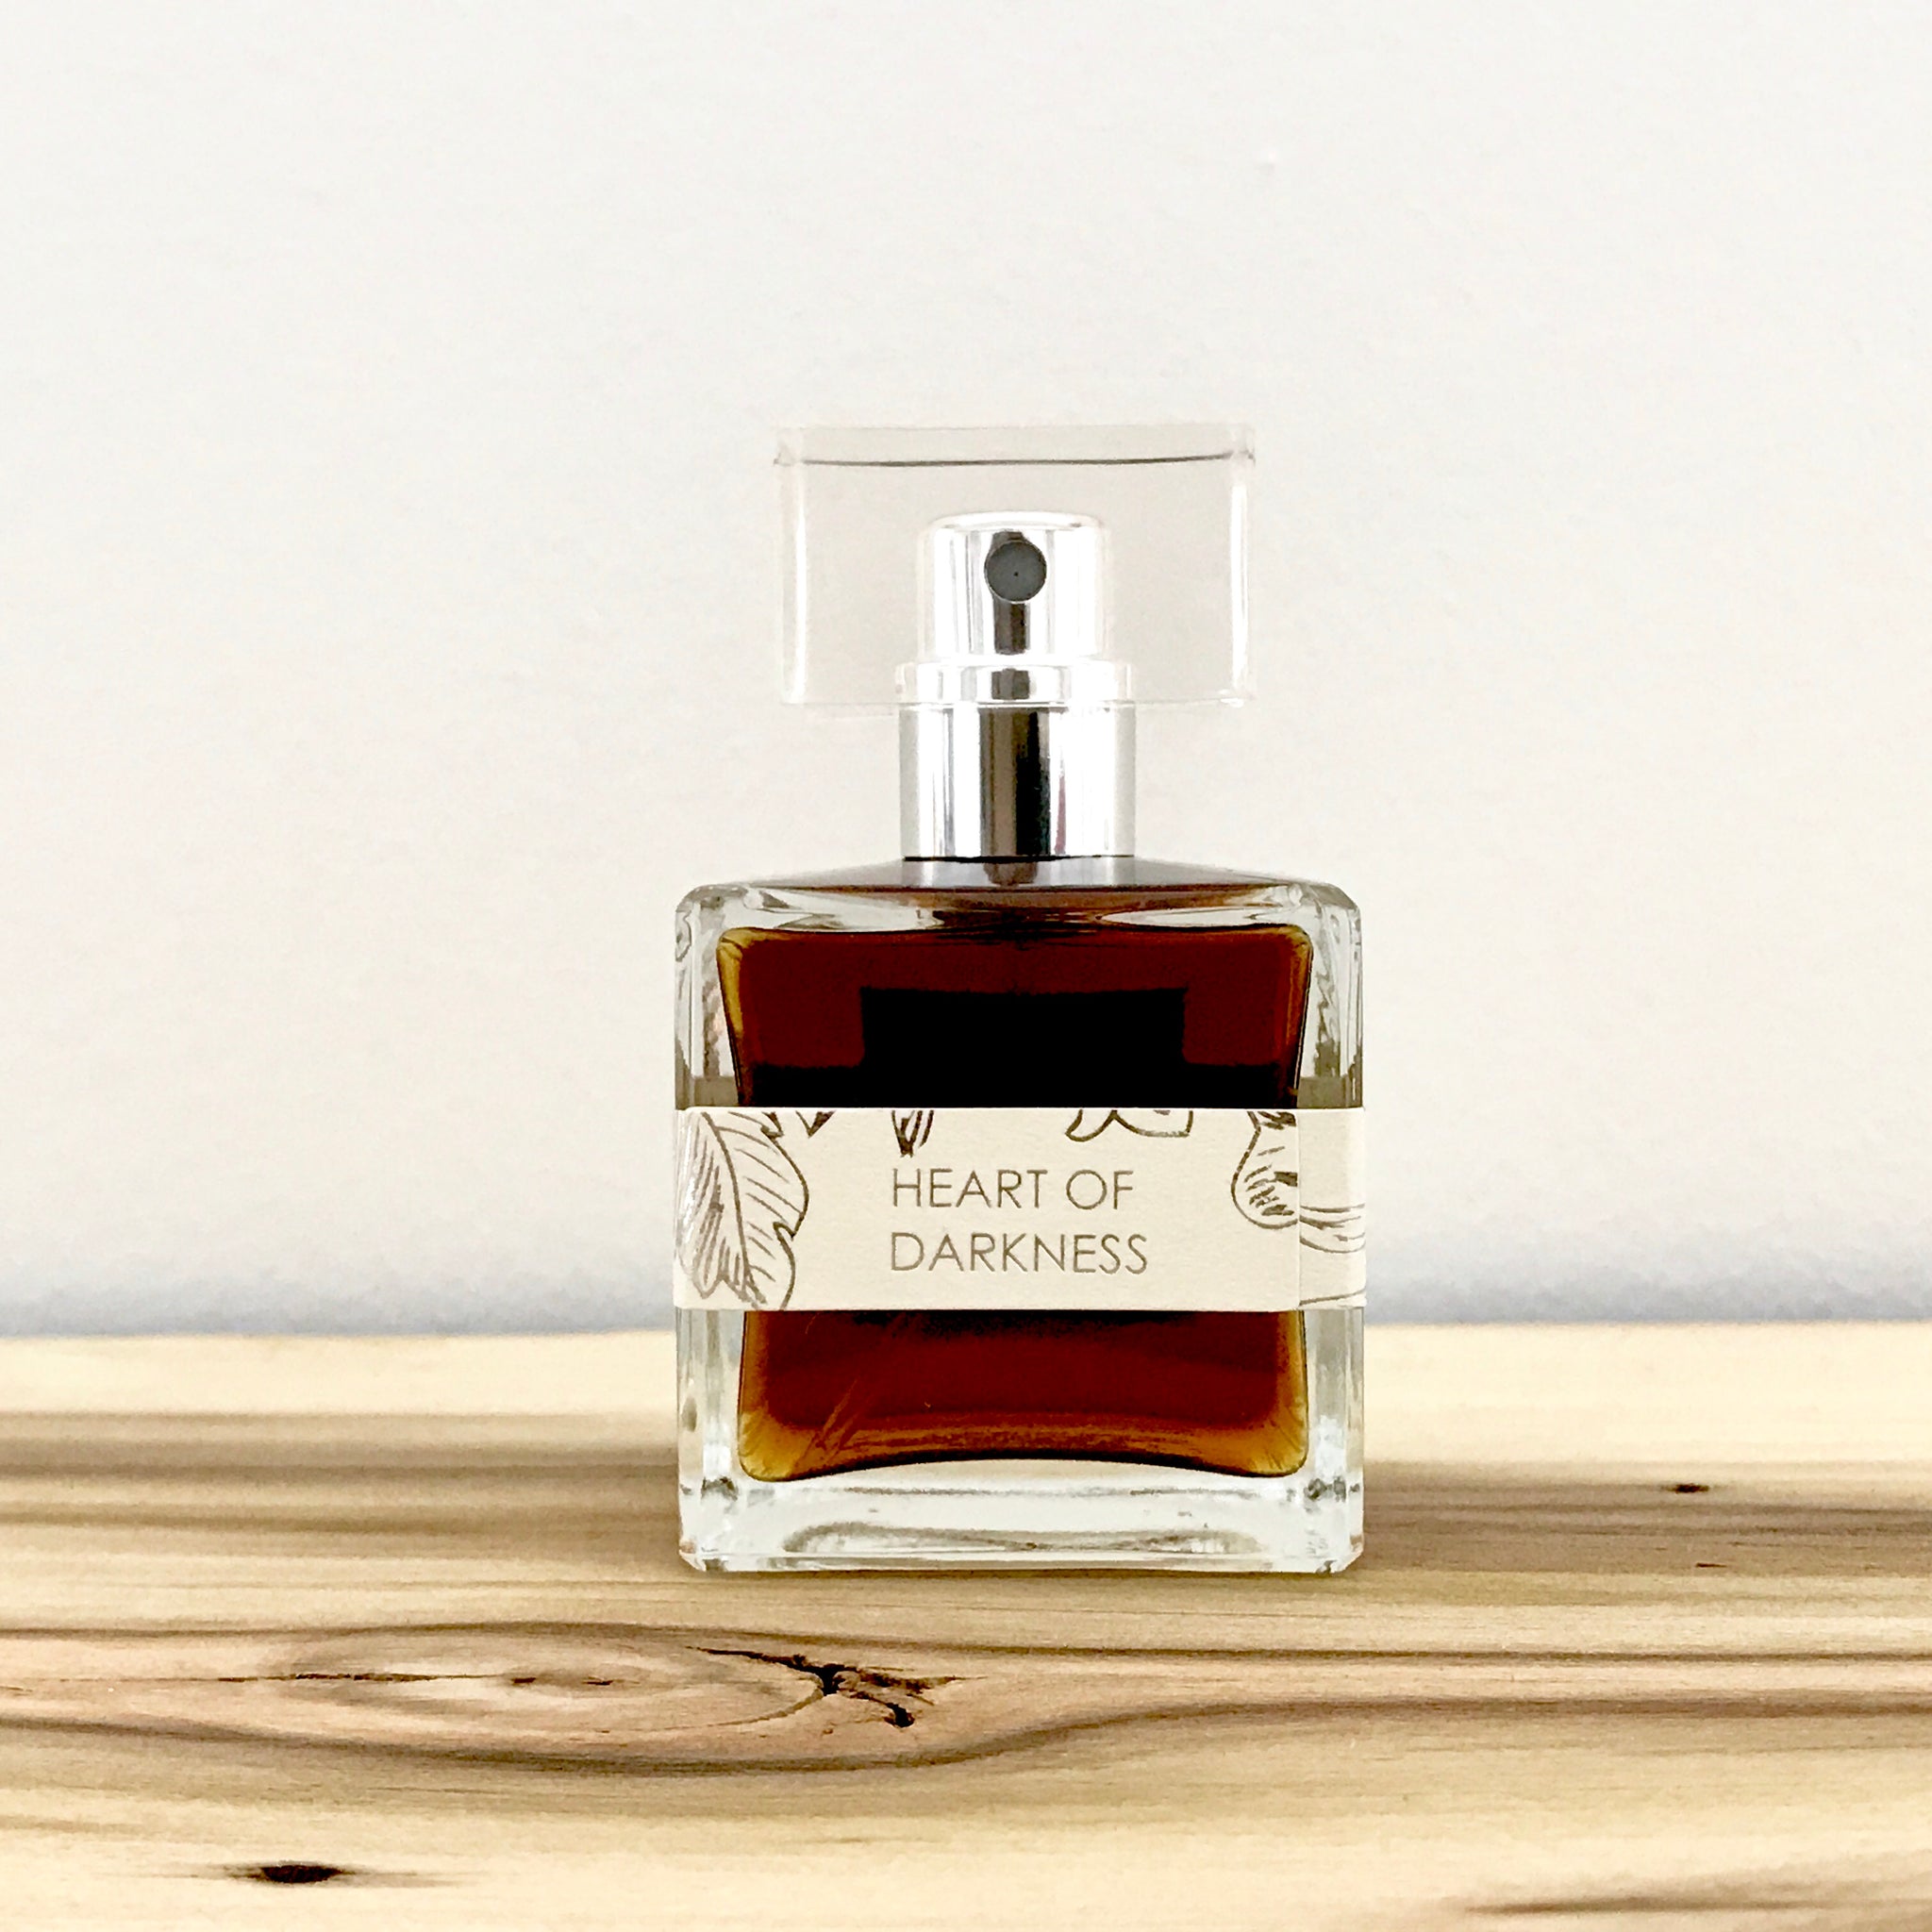 Oakmoss Absolute – Providence Perfume Co.